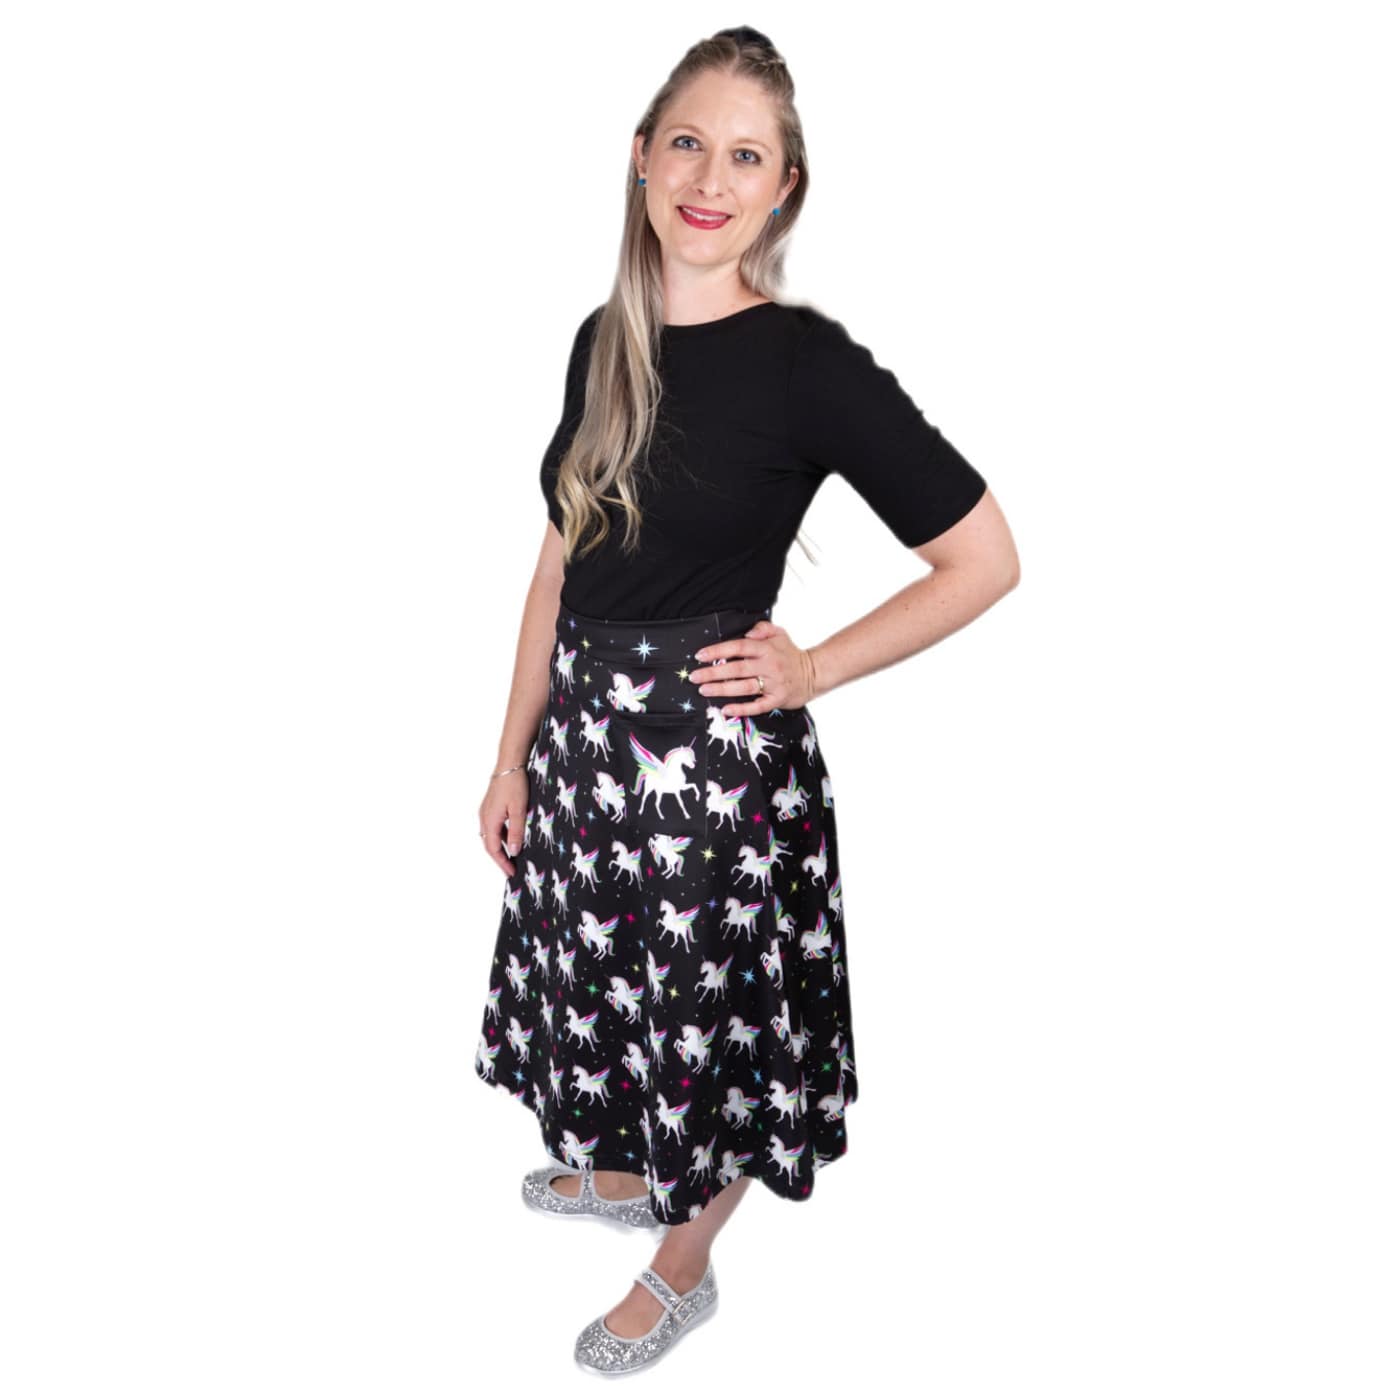 Blessing Original Skirt by RainbowsAndFairies.com.au (Unicorn - Winged Unicorn - Rainbow - Aline Skirt - Kitsch - Skirt With Pockets - Vintage Inspired) - SKU: CL_OSKRT_BLESS_ORG - Pic-02